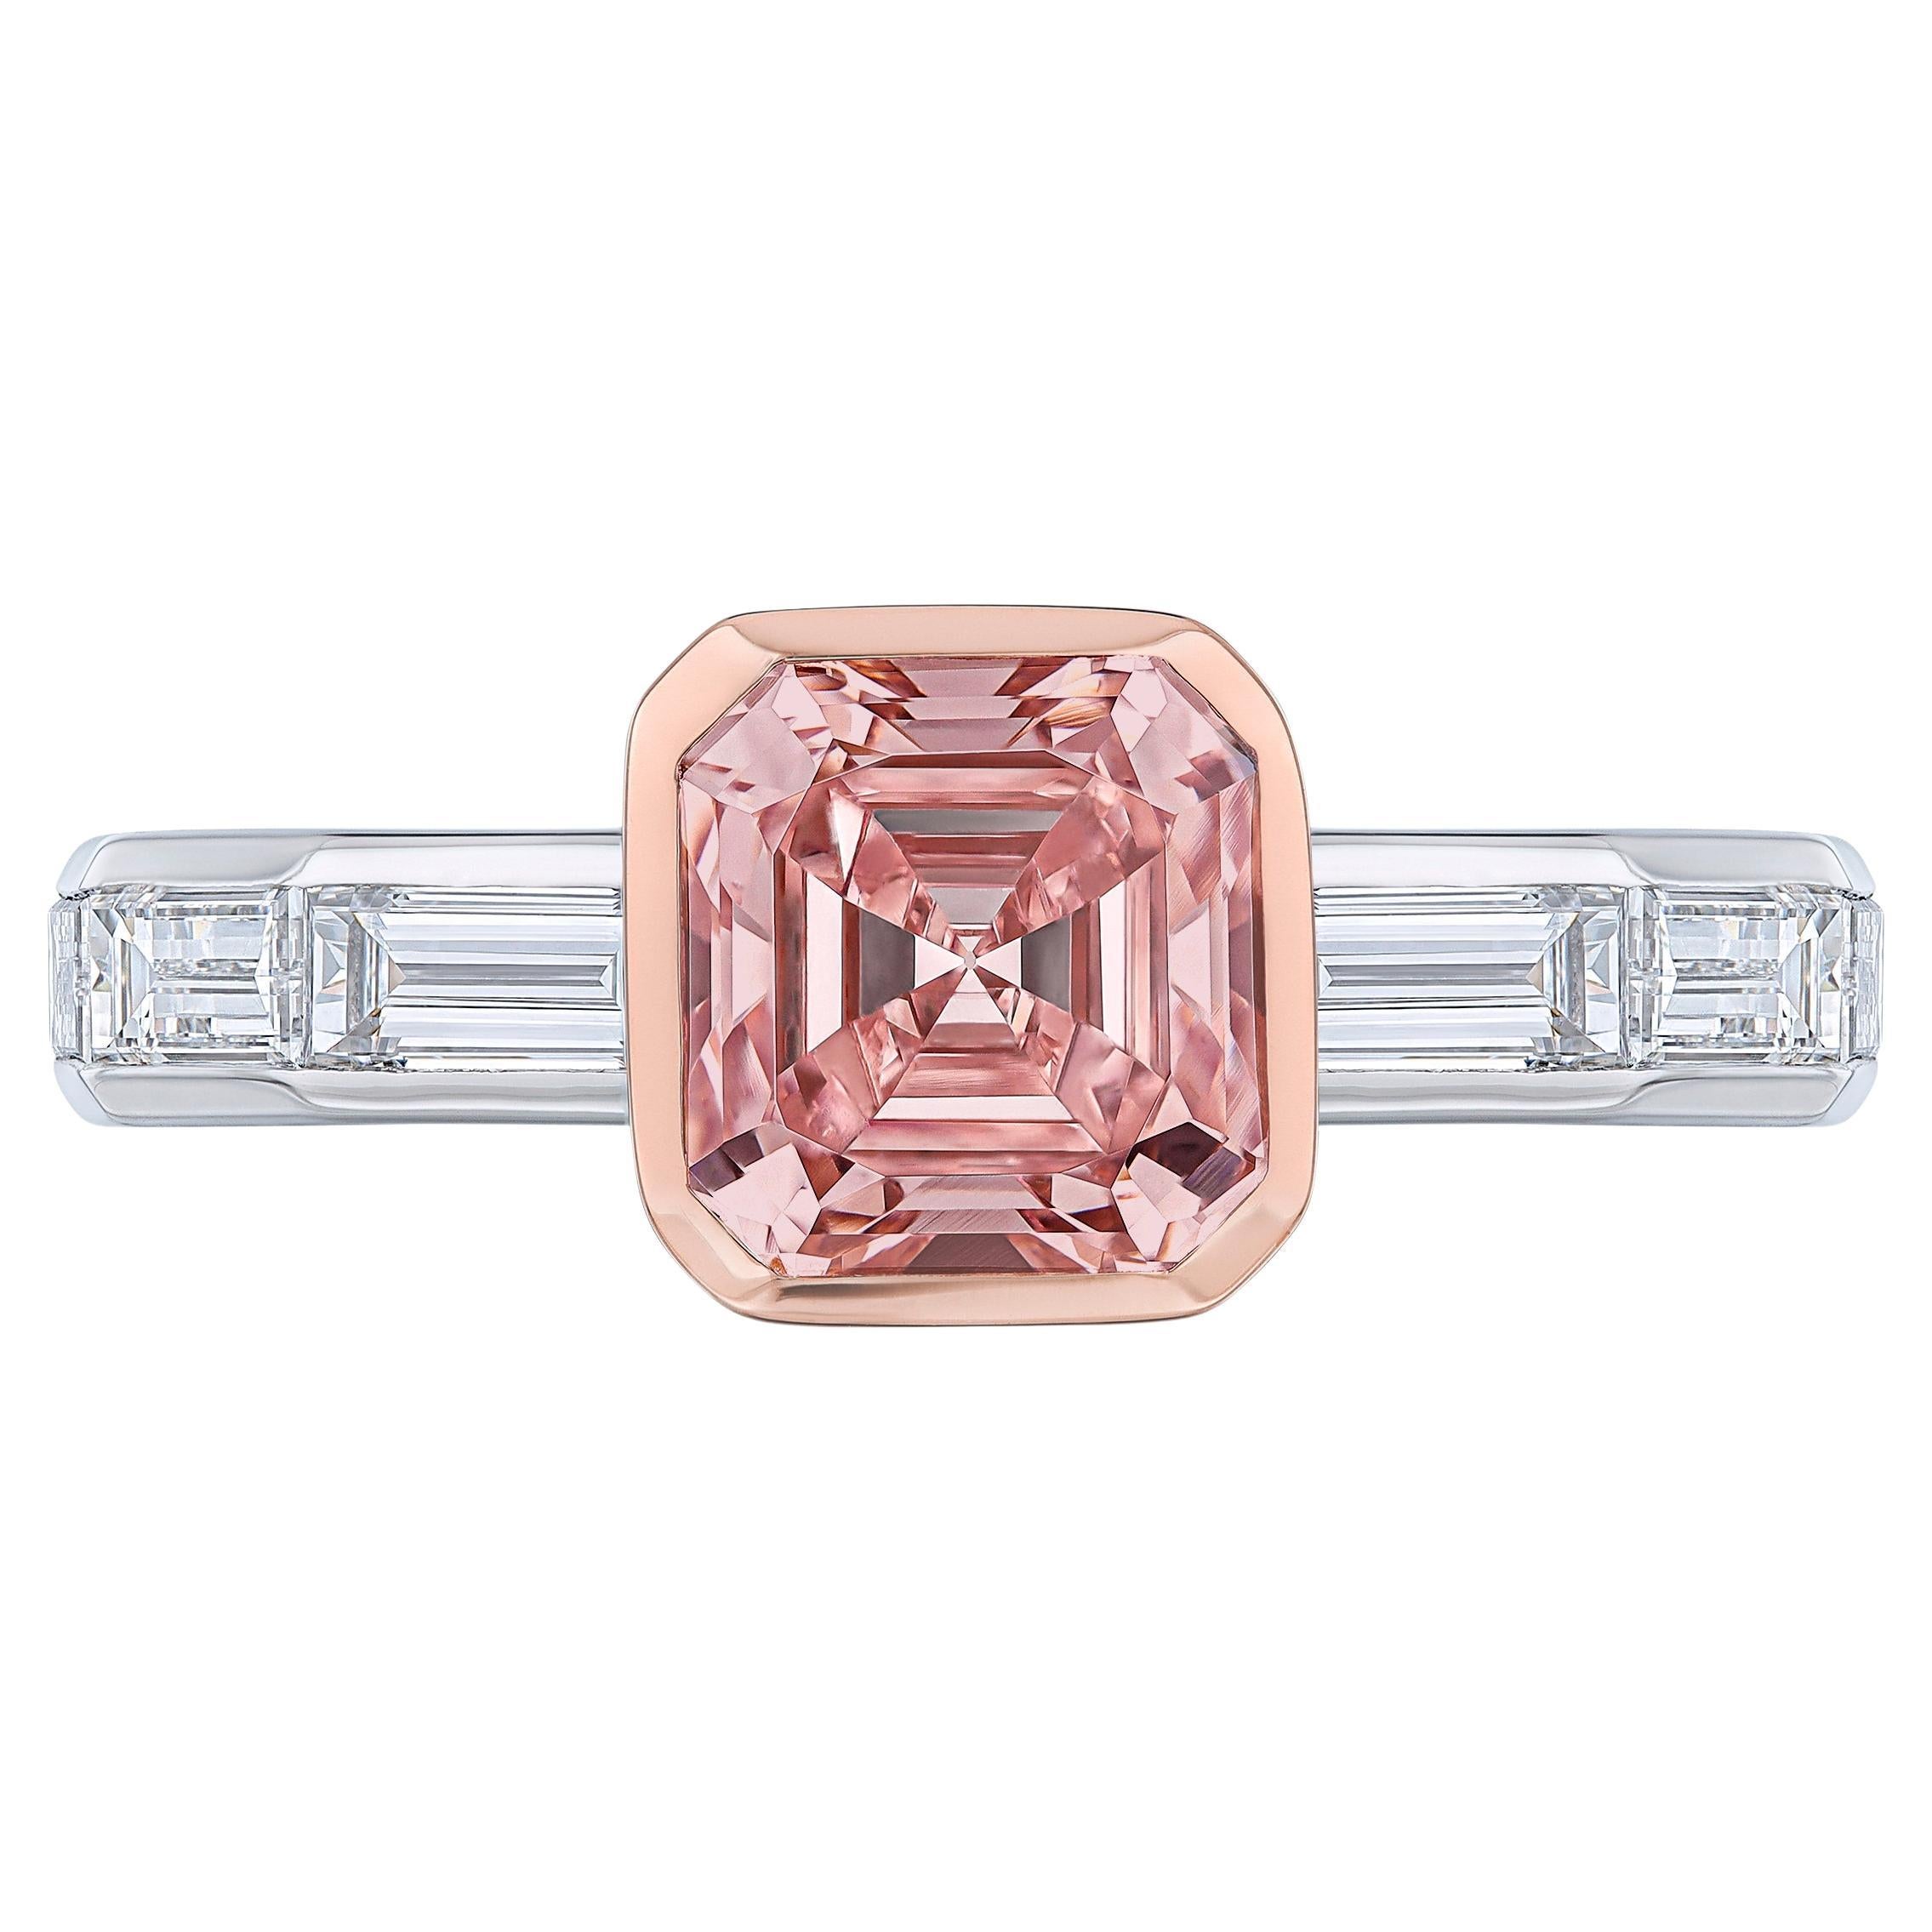 For Sale:  GIA Certified 1.57 Carat Fancy Pink-Brown Asscher Cut Diamond Engagement Ring